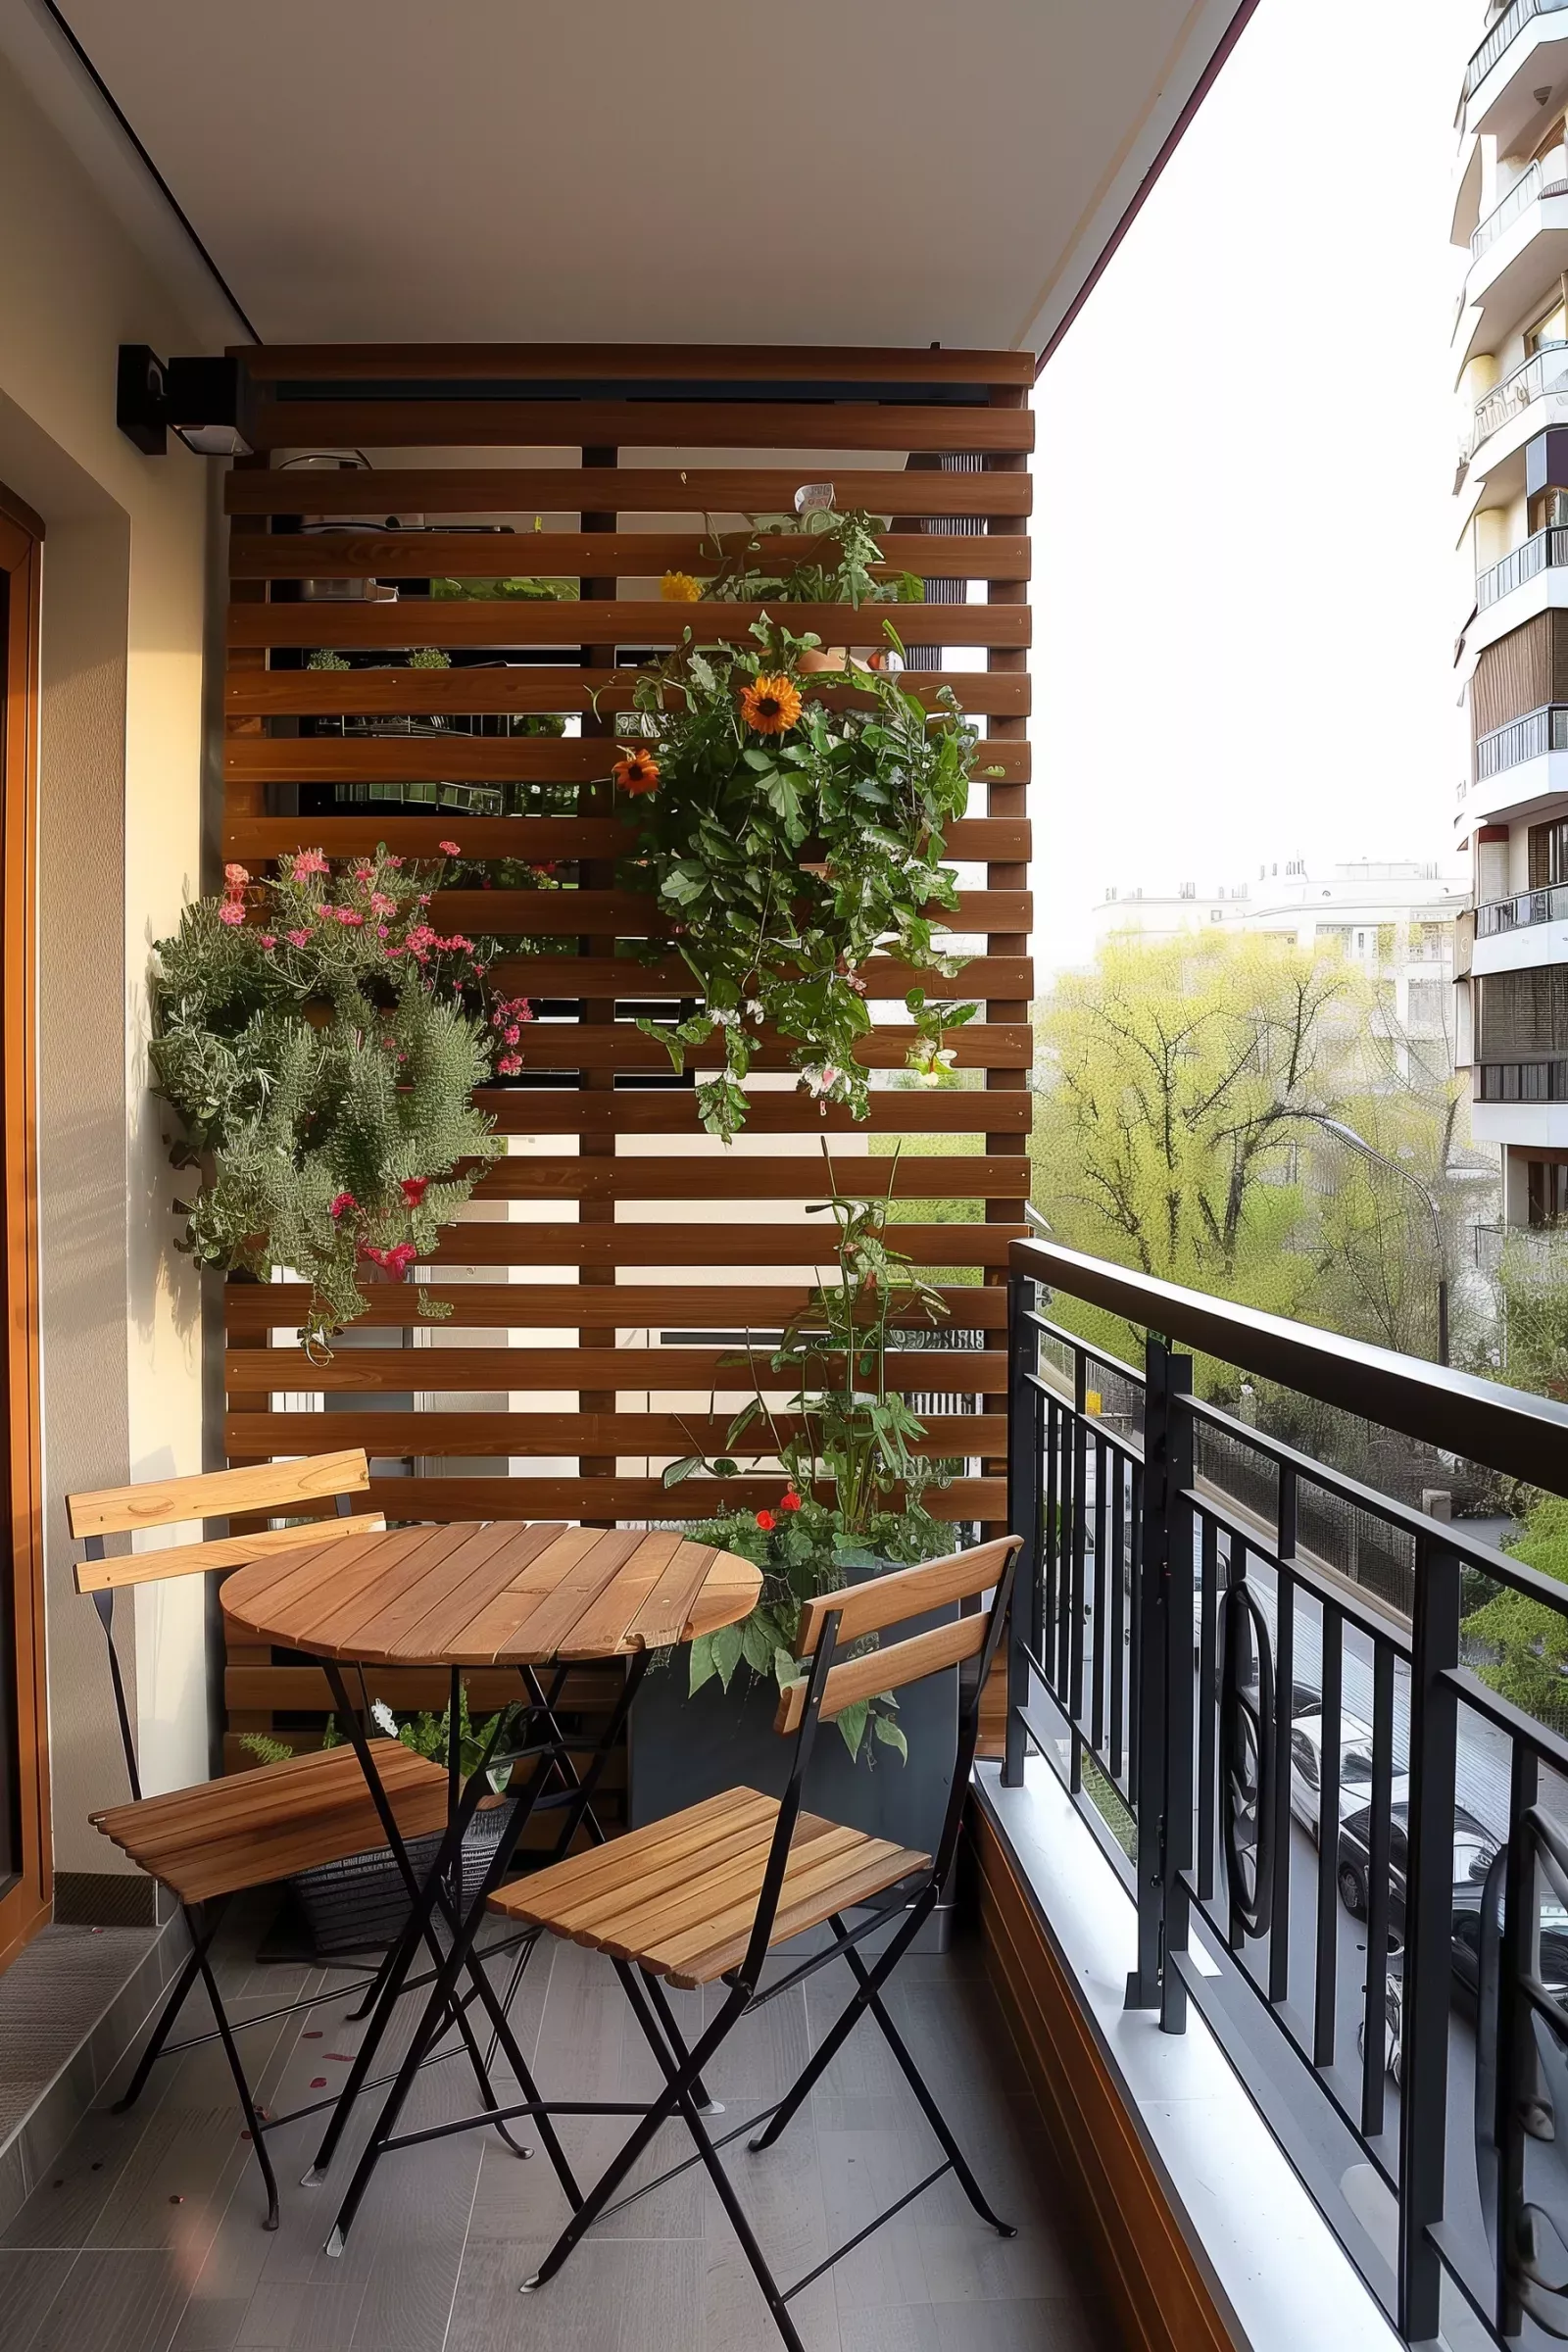 apartment balcony privacy screen